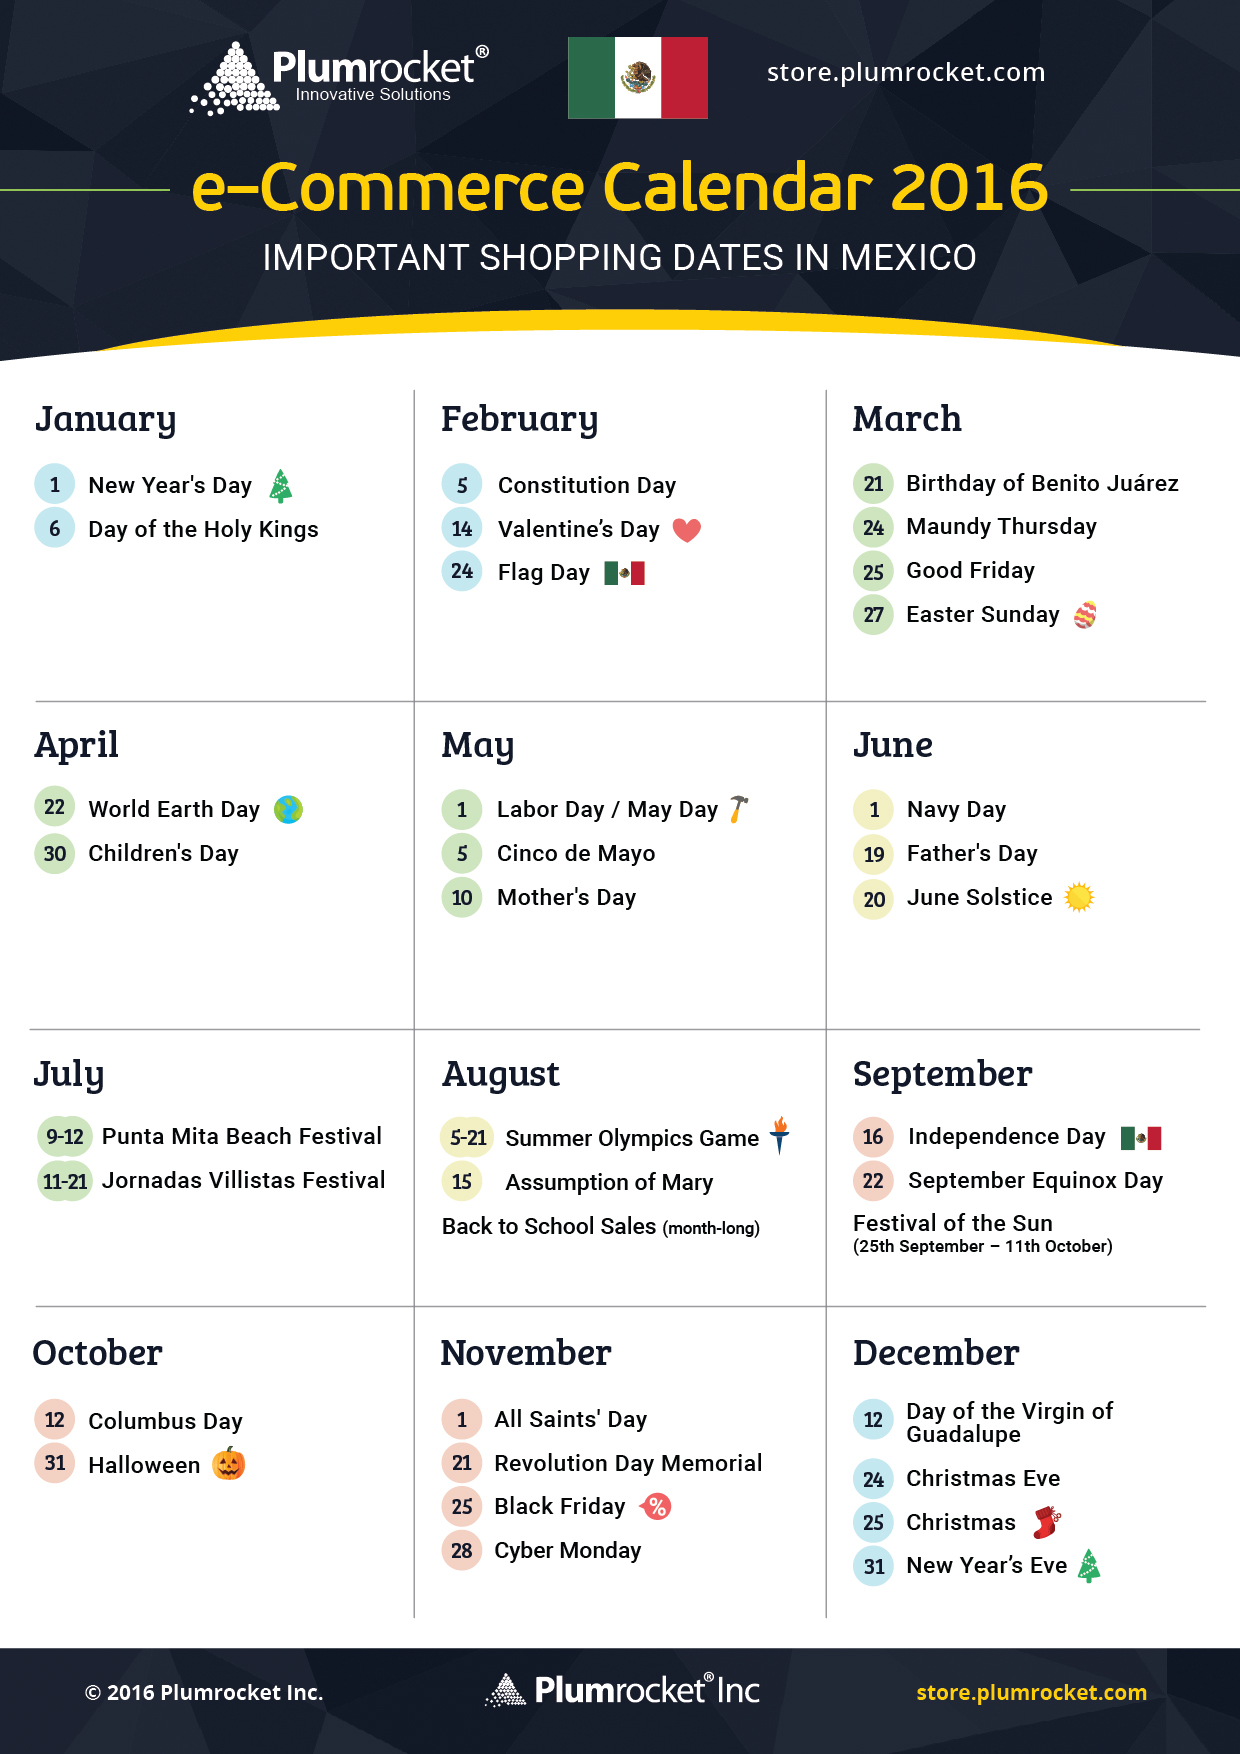 Marketing Calendar Mexico 2016 by Plumrocket